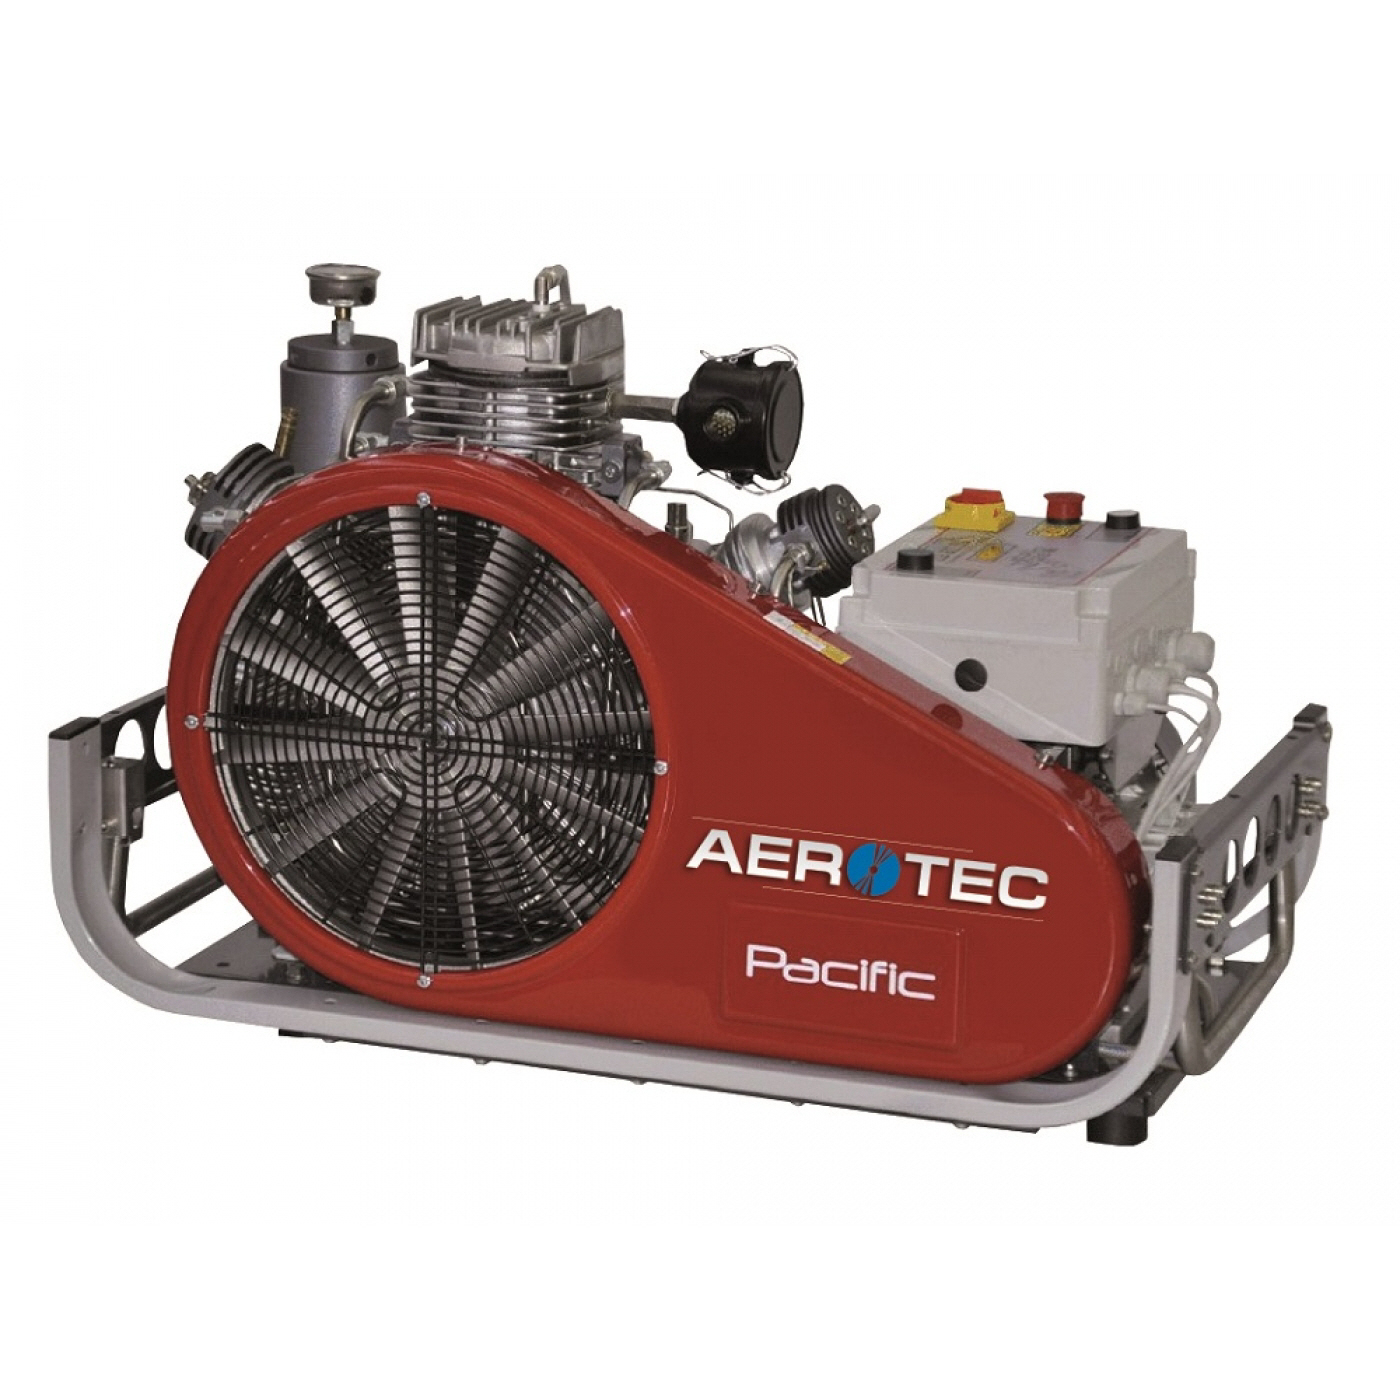 AEROTEC Kolbenkompressor PACIFIC E 27 - 330 bar Tauchkompressoren